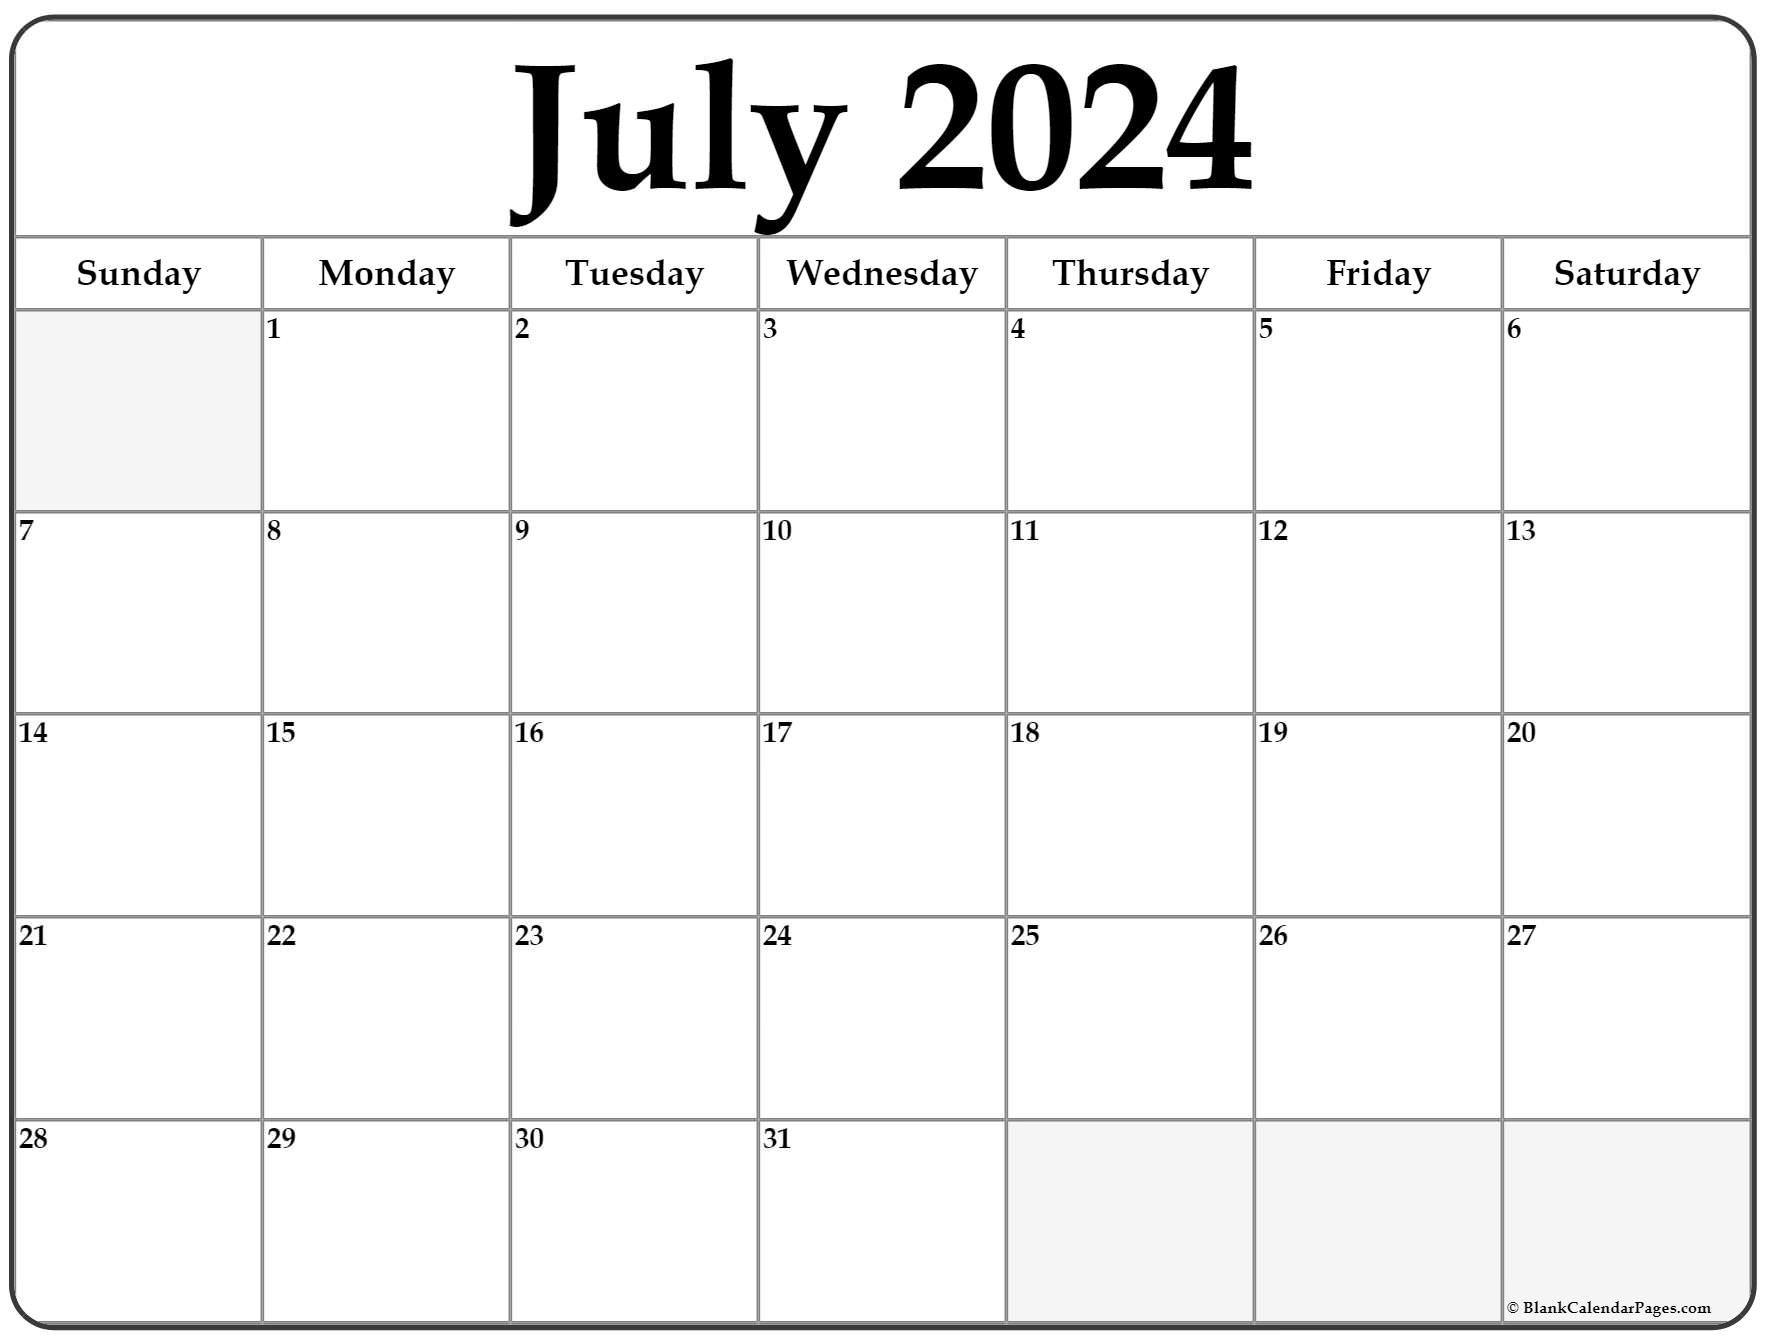 Print July 2022 Calendar July 2022 Calendar | Free Printable Calendar Templates